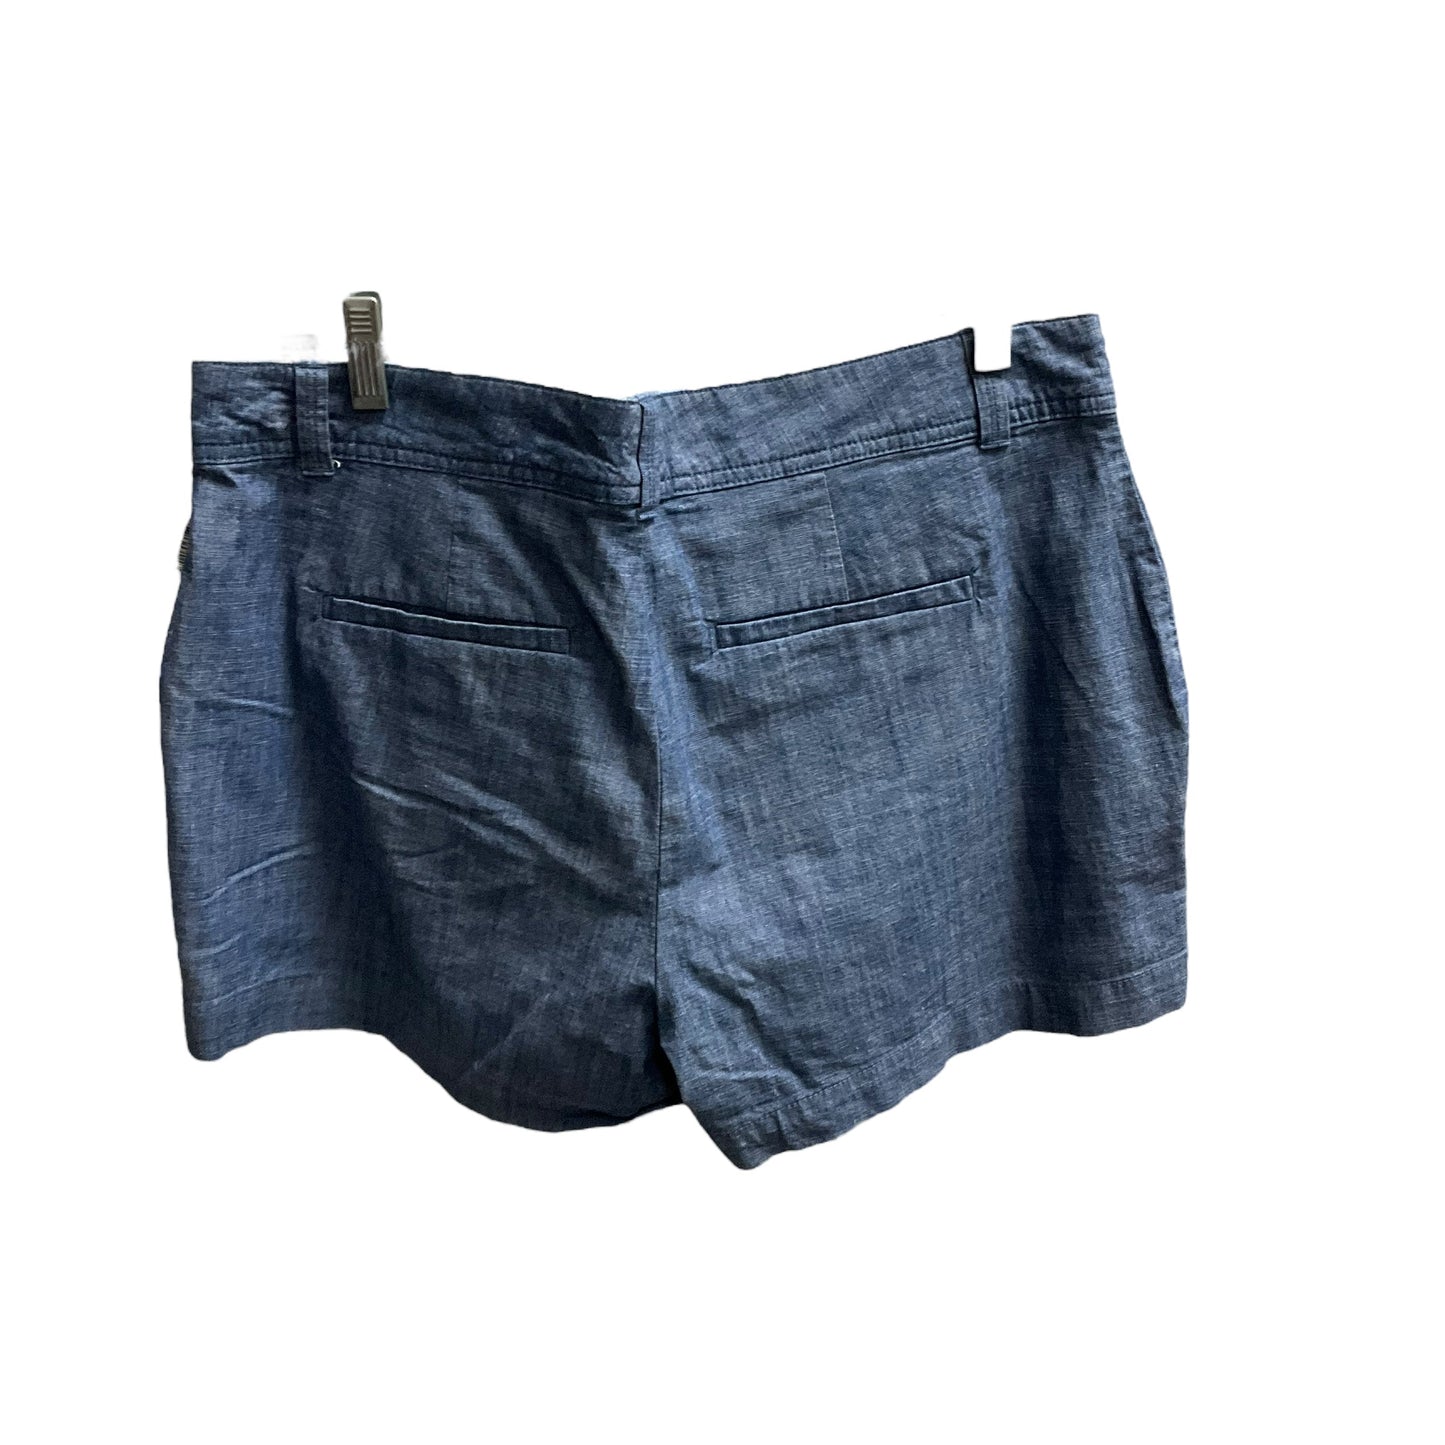 Blue Shorts Gap, Size 10